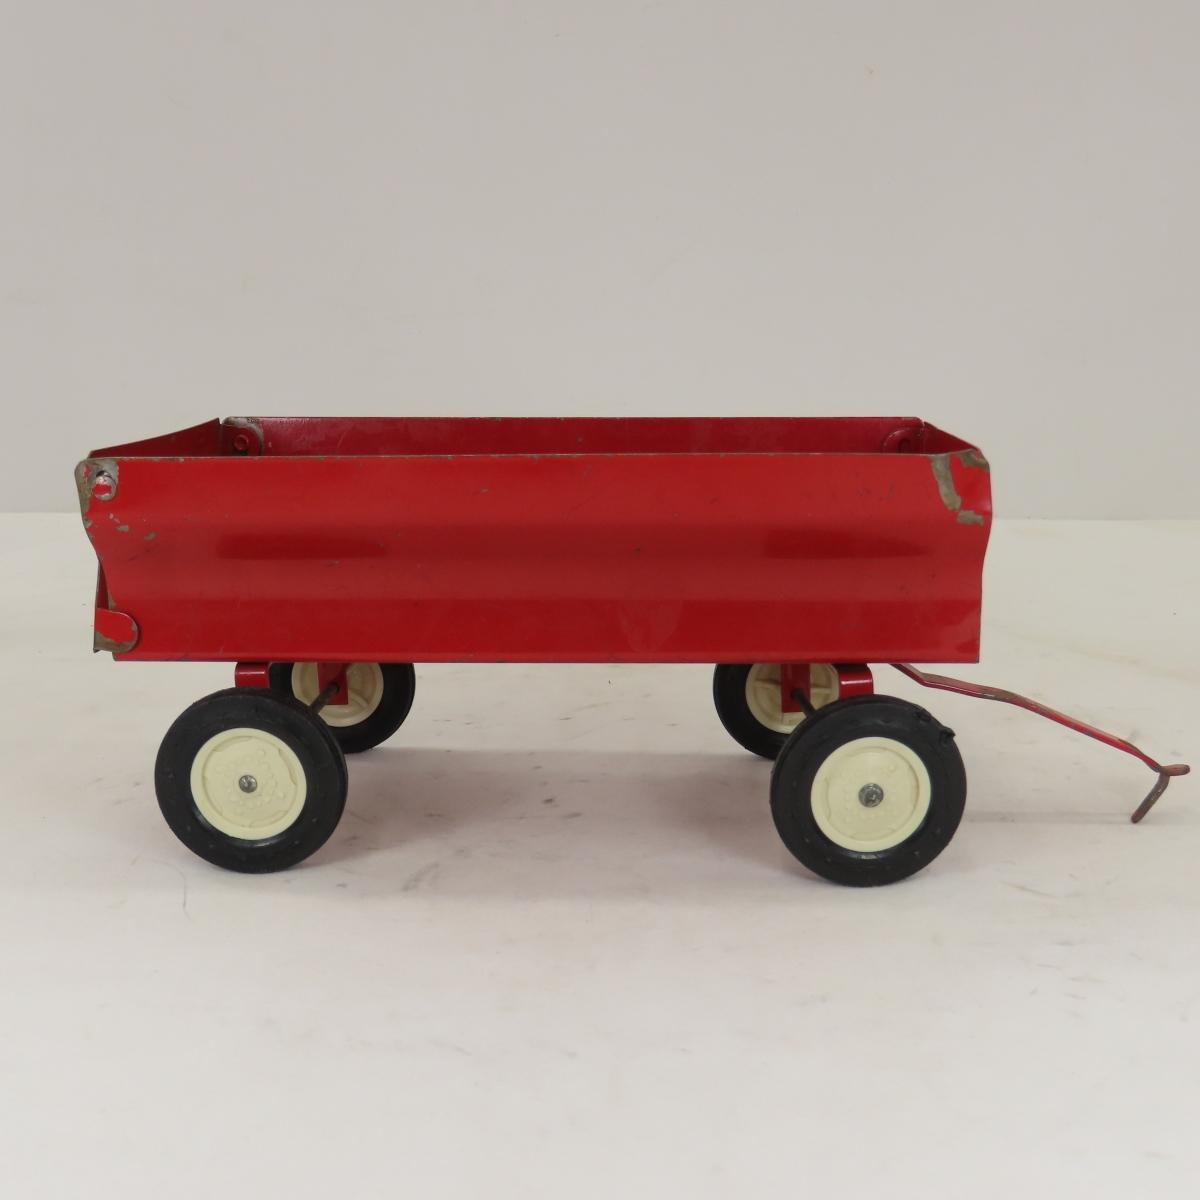 IH & McCormick Red Tractors & Farm Equipment